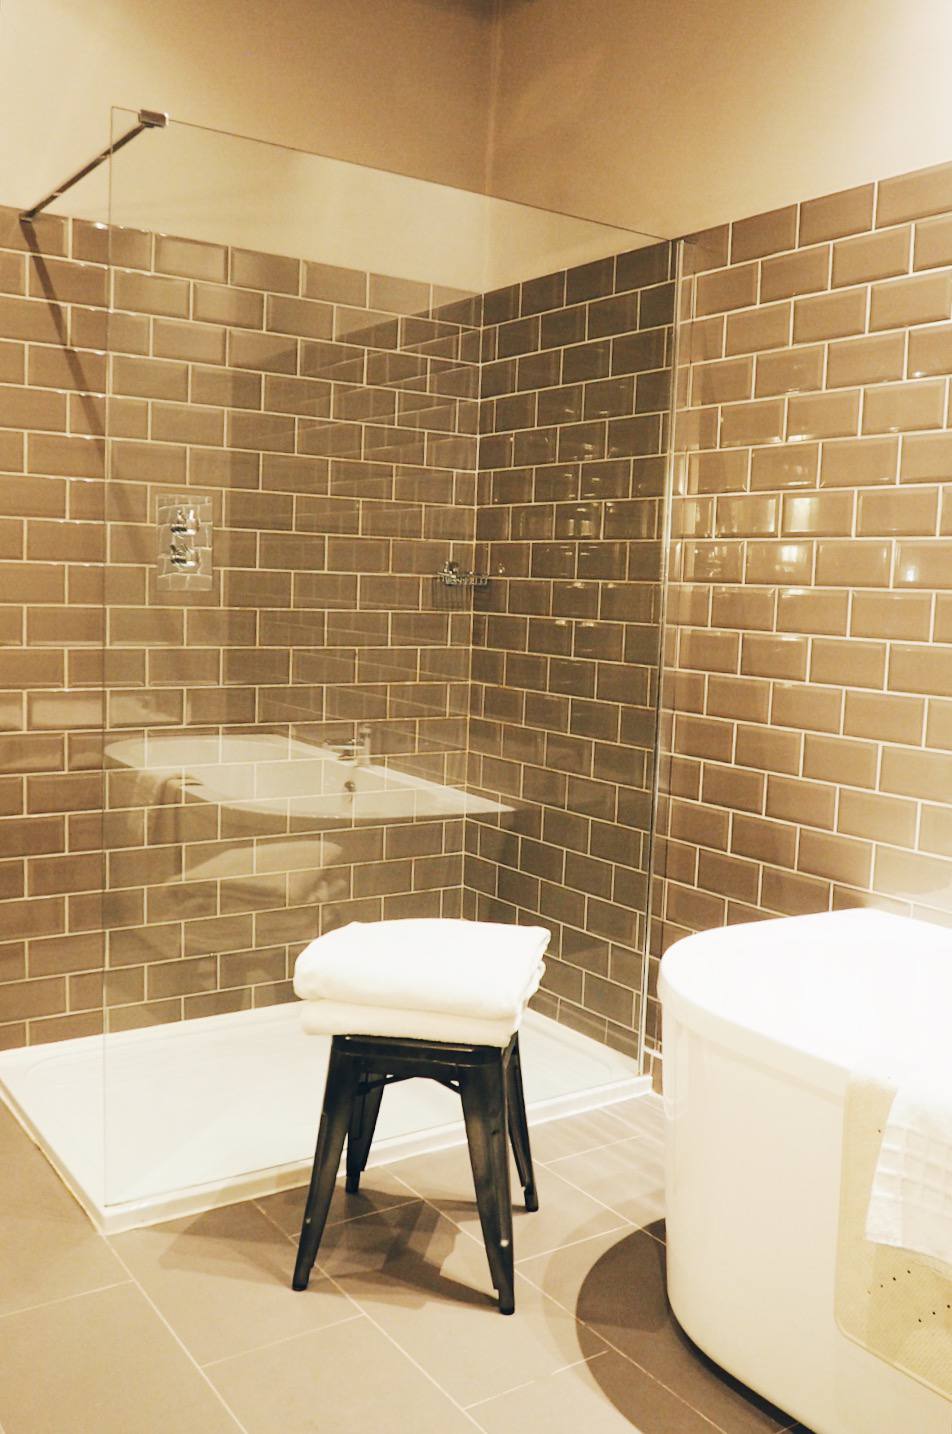 Bathrooms at Titanic Hotel Liverpool